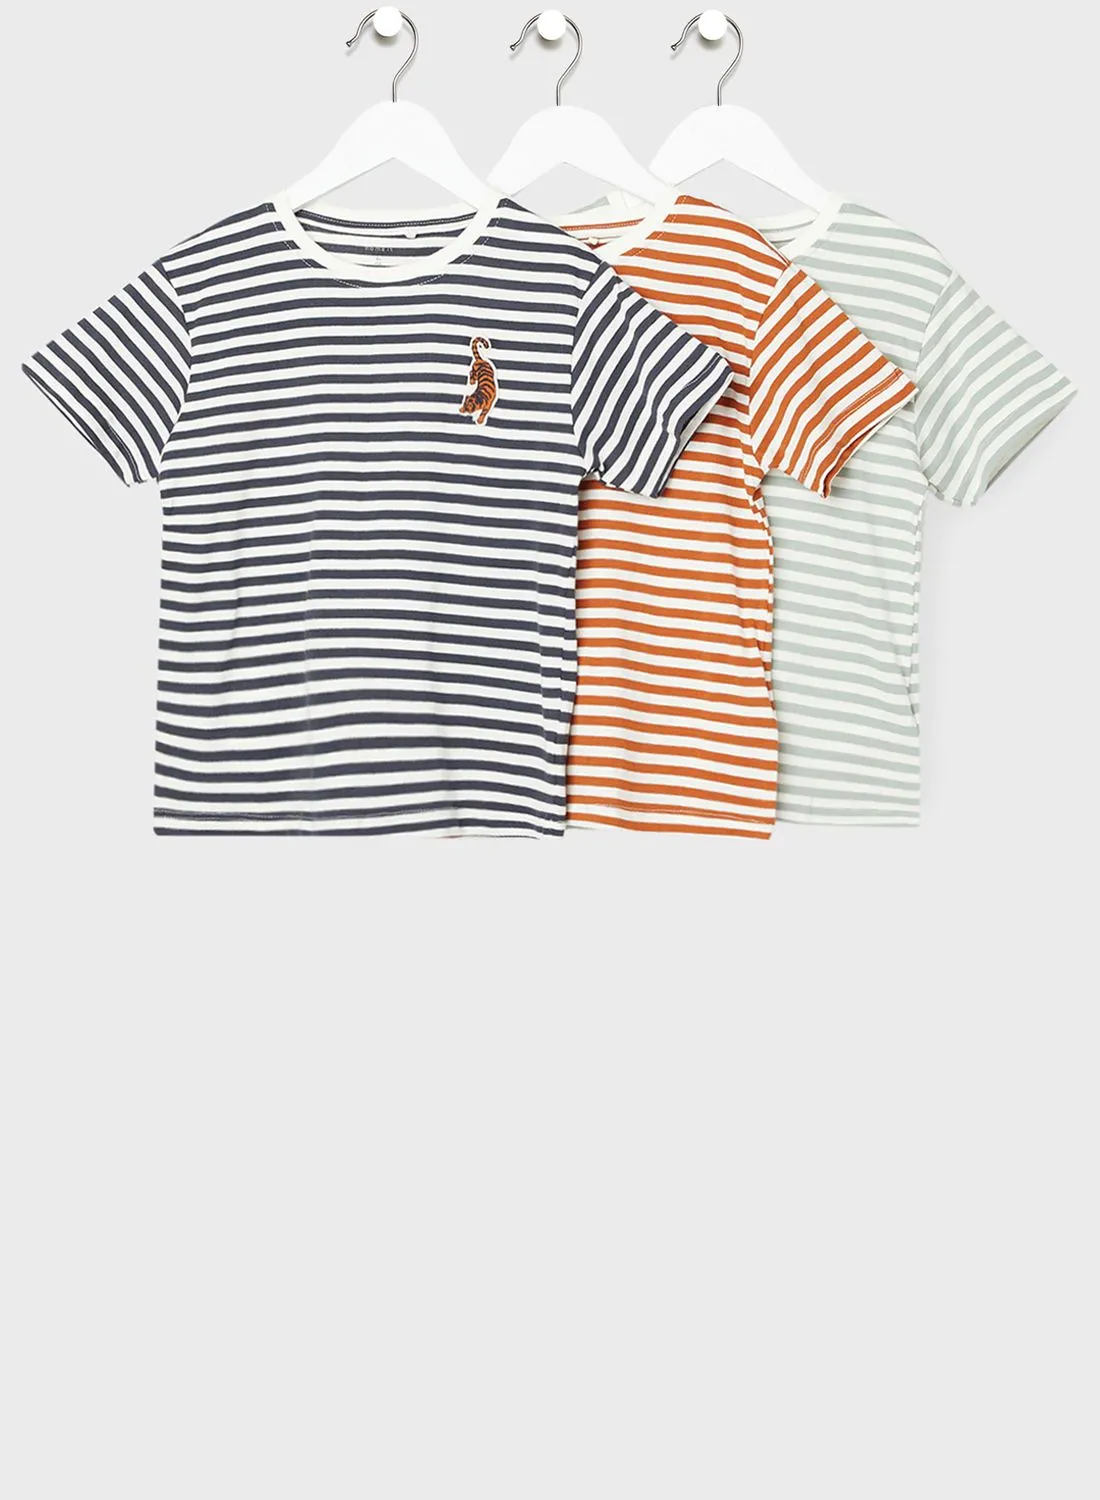 NAME IT Kids 3 Pack Striped T-Shirt